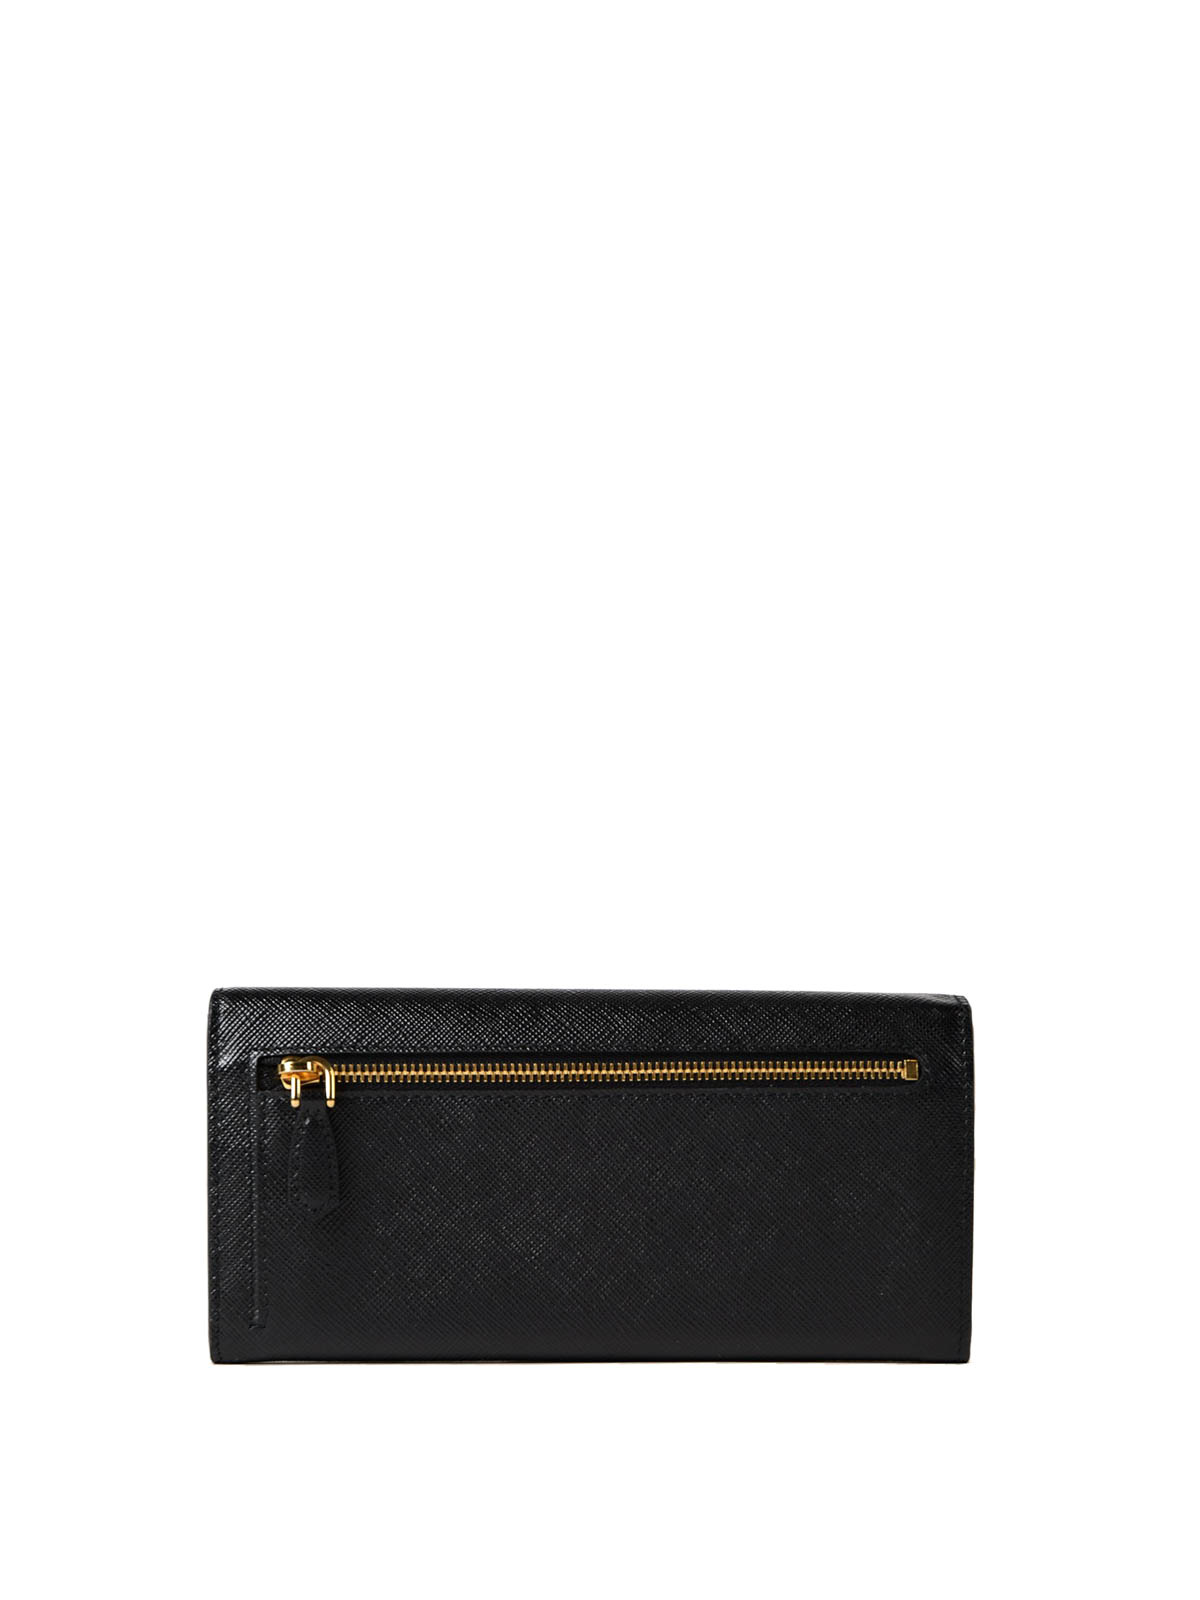 prada continental saffiano leather wallet